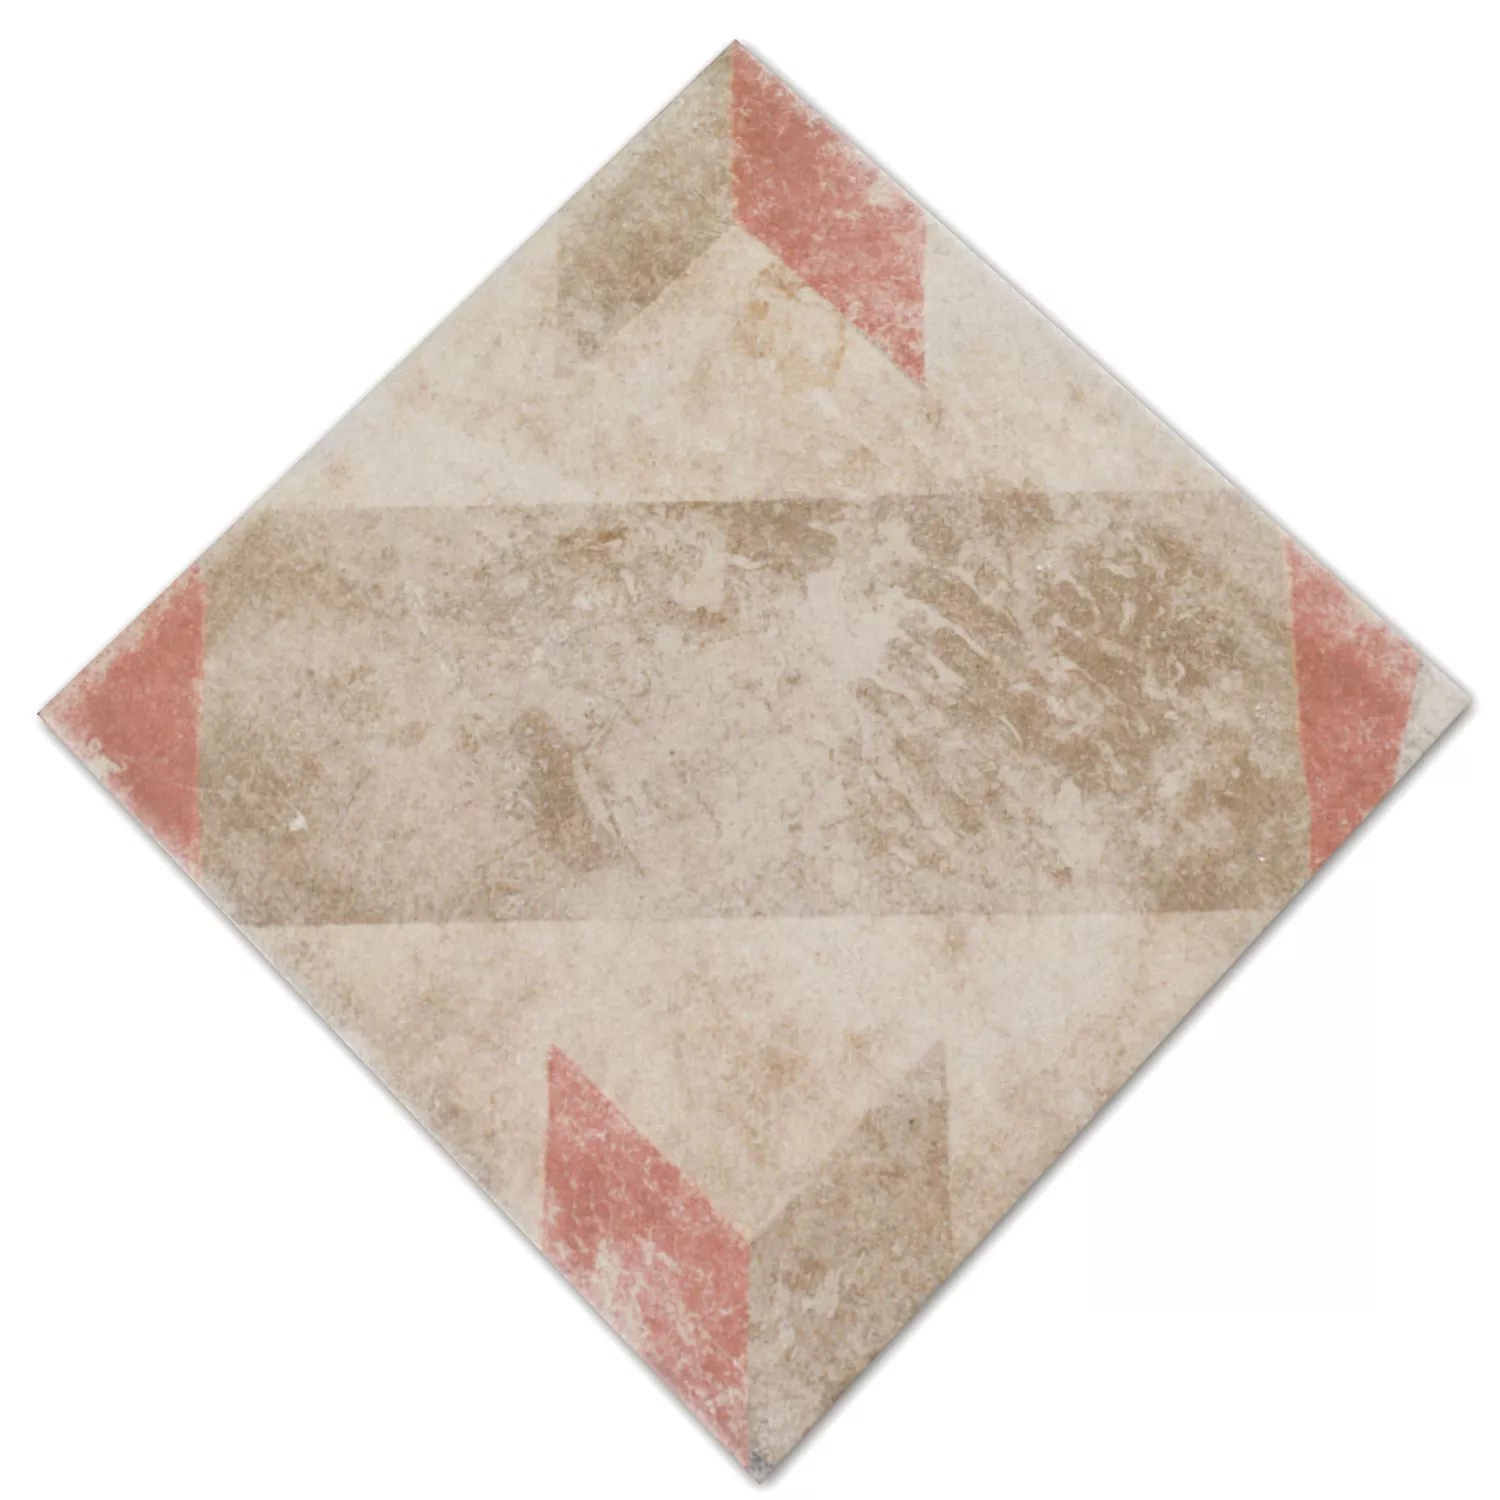 Cement Tiles Optic Floor Tiles Decor Milano Star